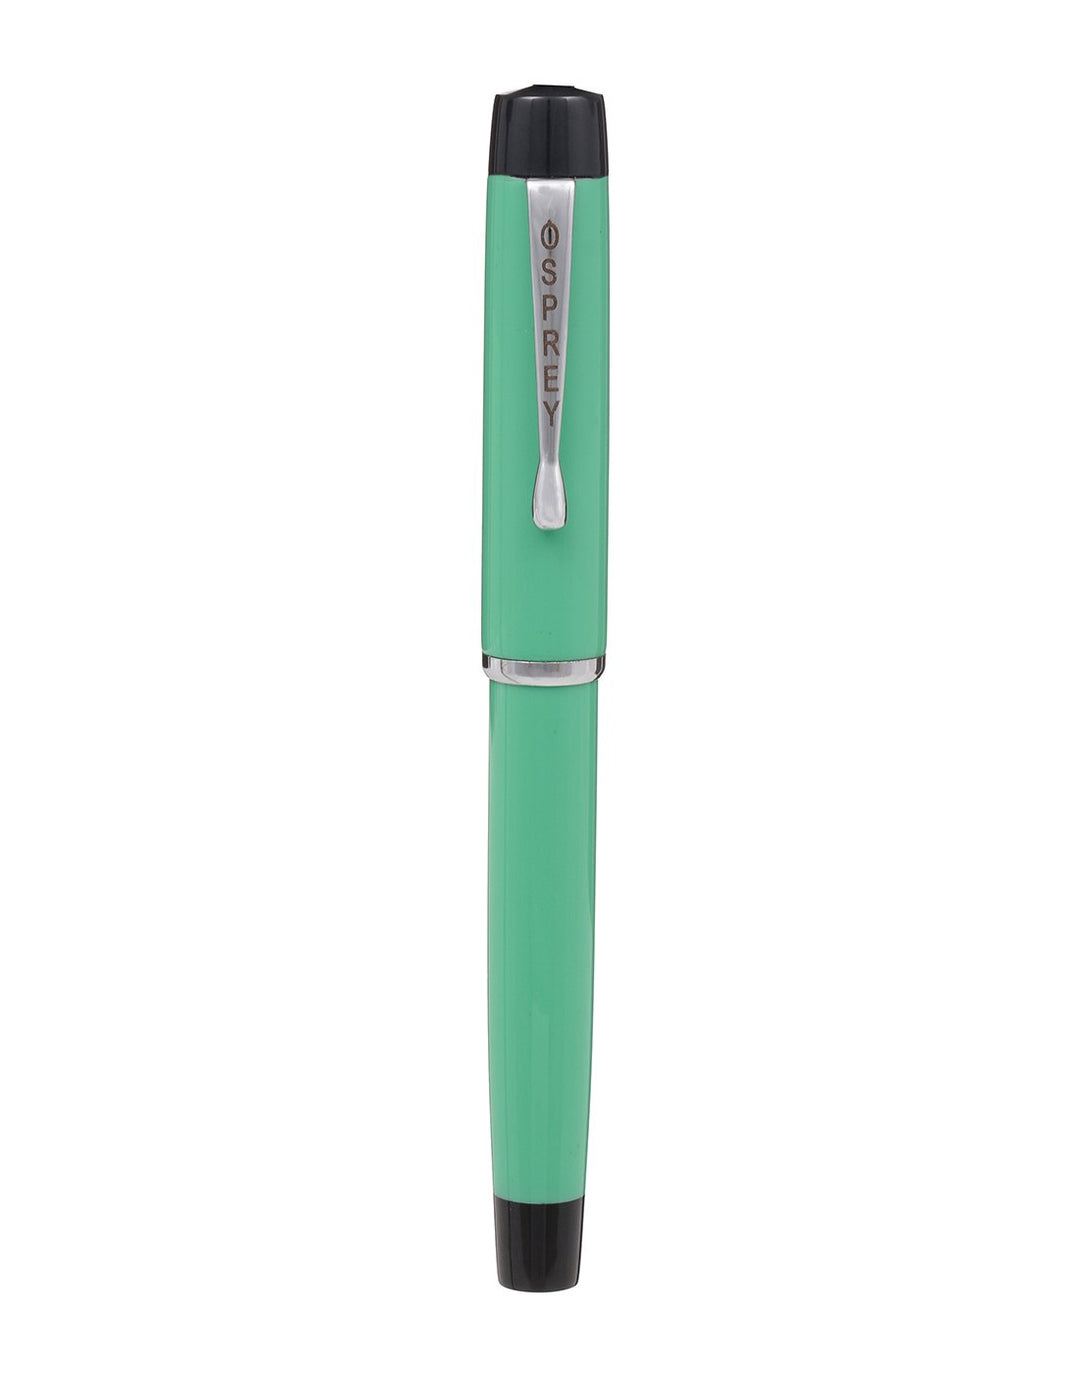 OSPREY PENS - SCHOLAR Fountain Pen "Rainforest Green" With Standard And Flex Nib Options - Buchan's Kerrisdale Stationery